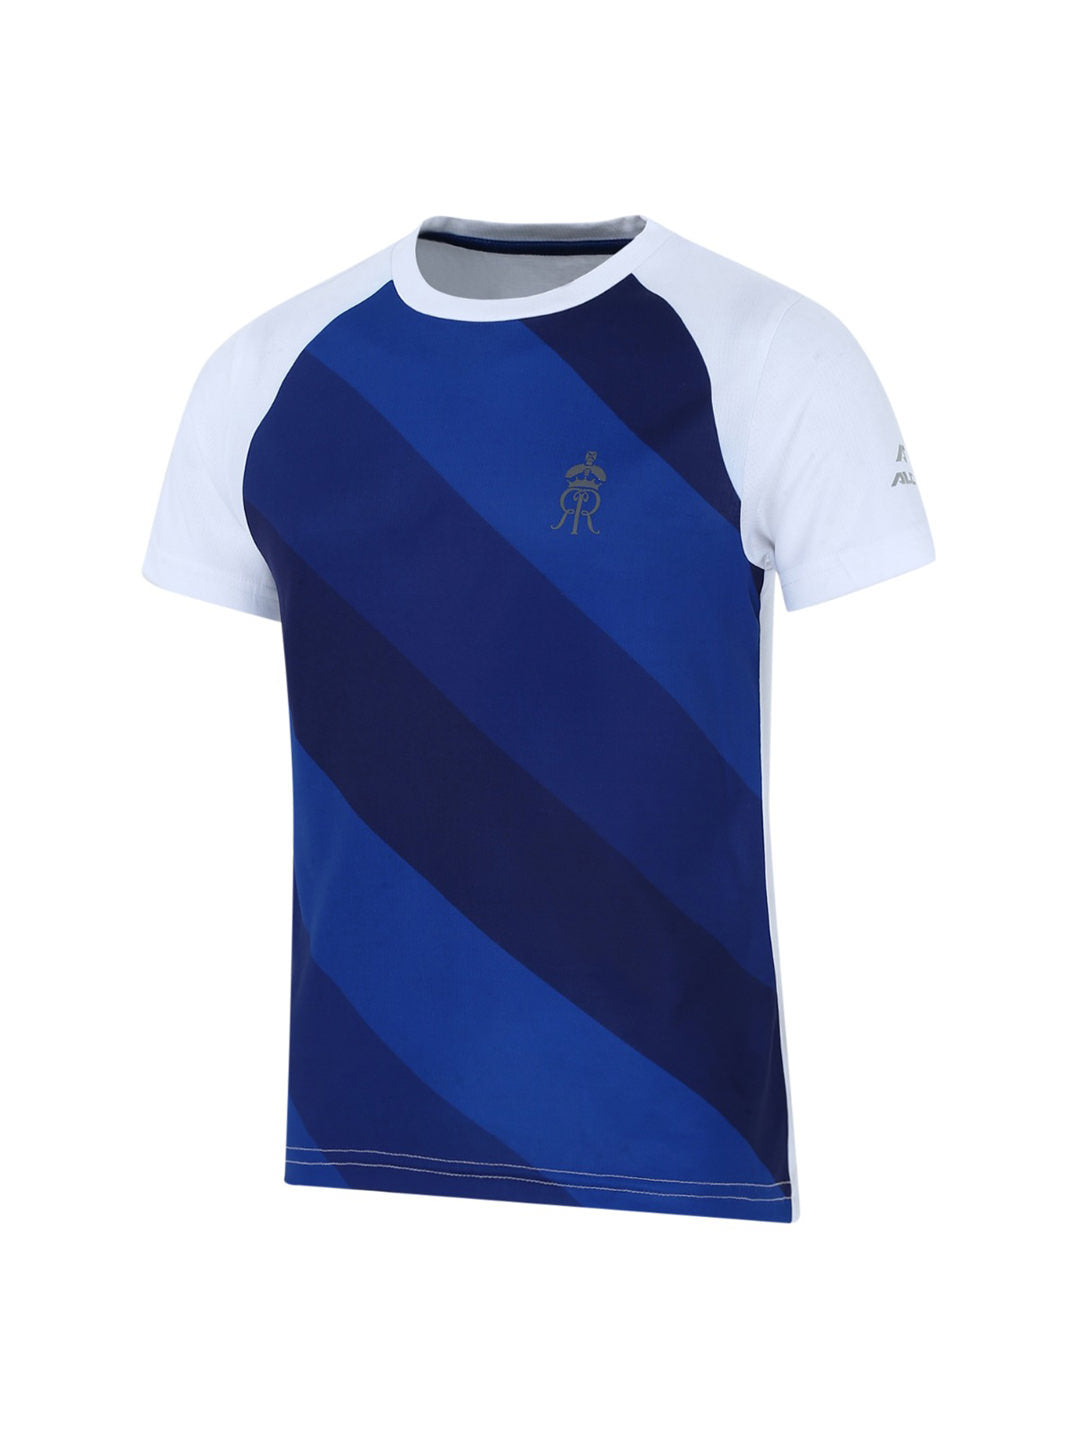 Alcis Boys Rajasthan Royals Blue Striped Round Neck T-shirt